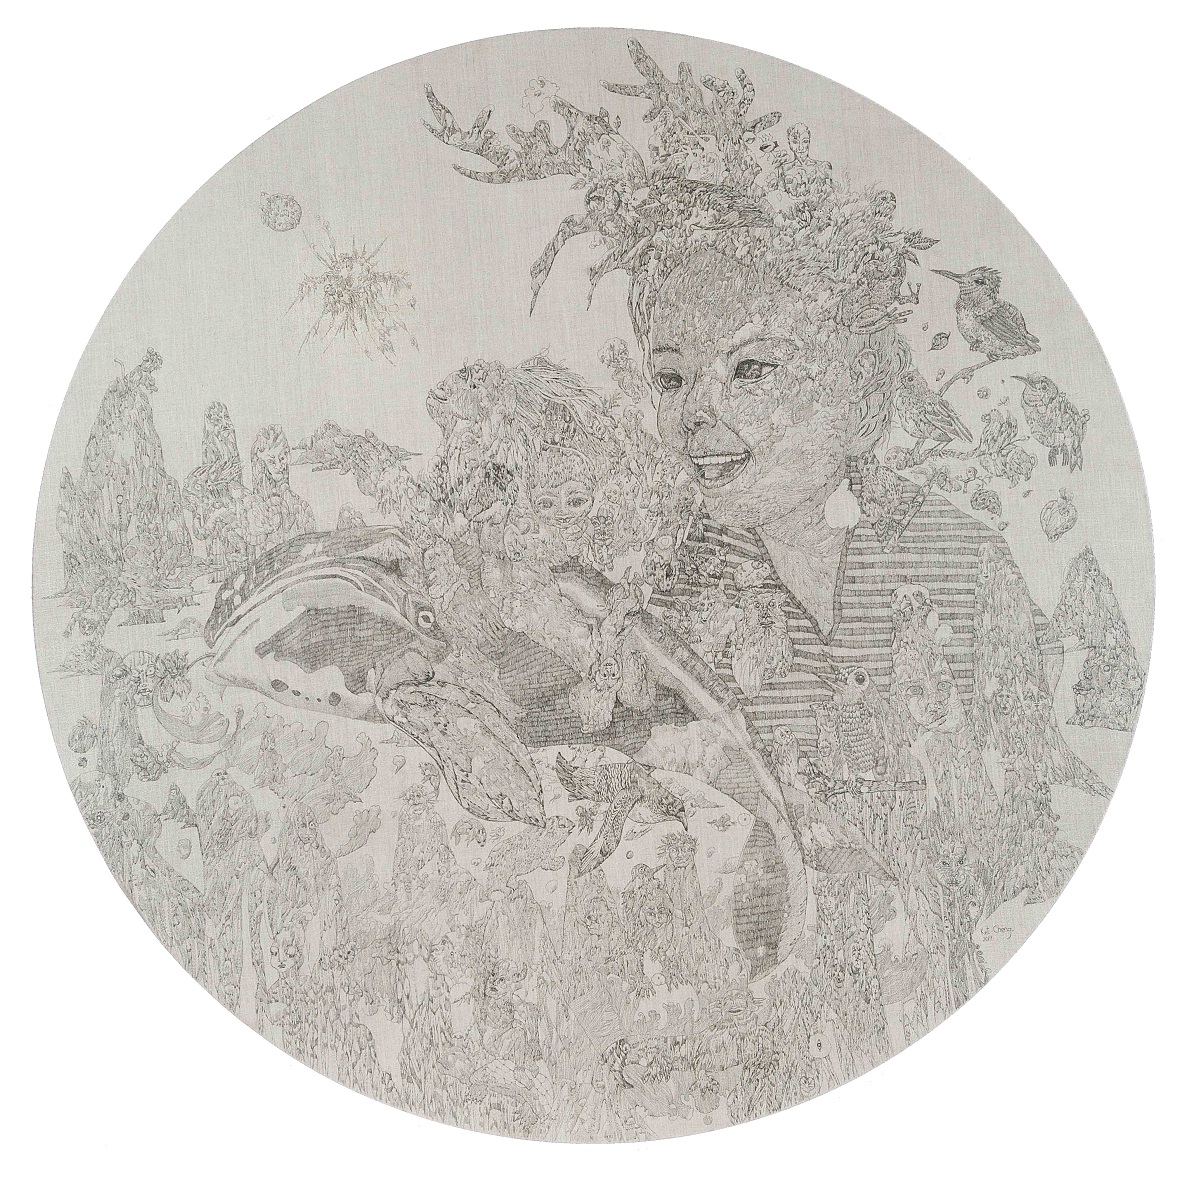 Cheong Kiet Cheng - Chasing Sun (2019), Ink on canvas,150cm diameter